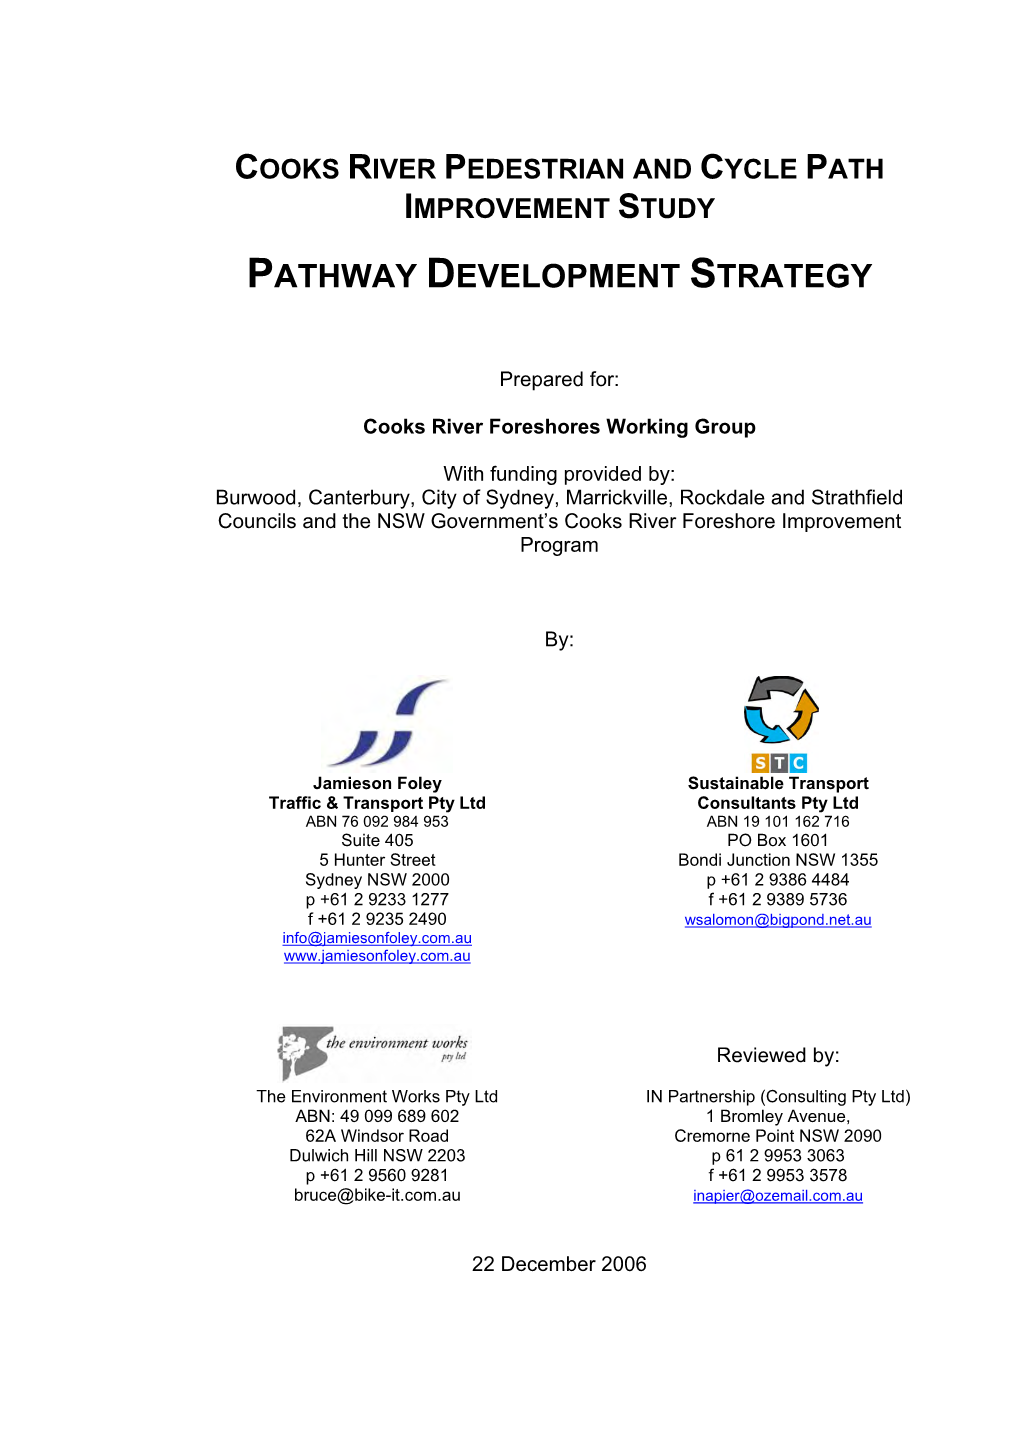 Pathway Development Strategy